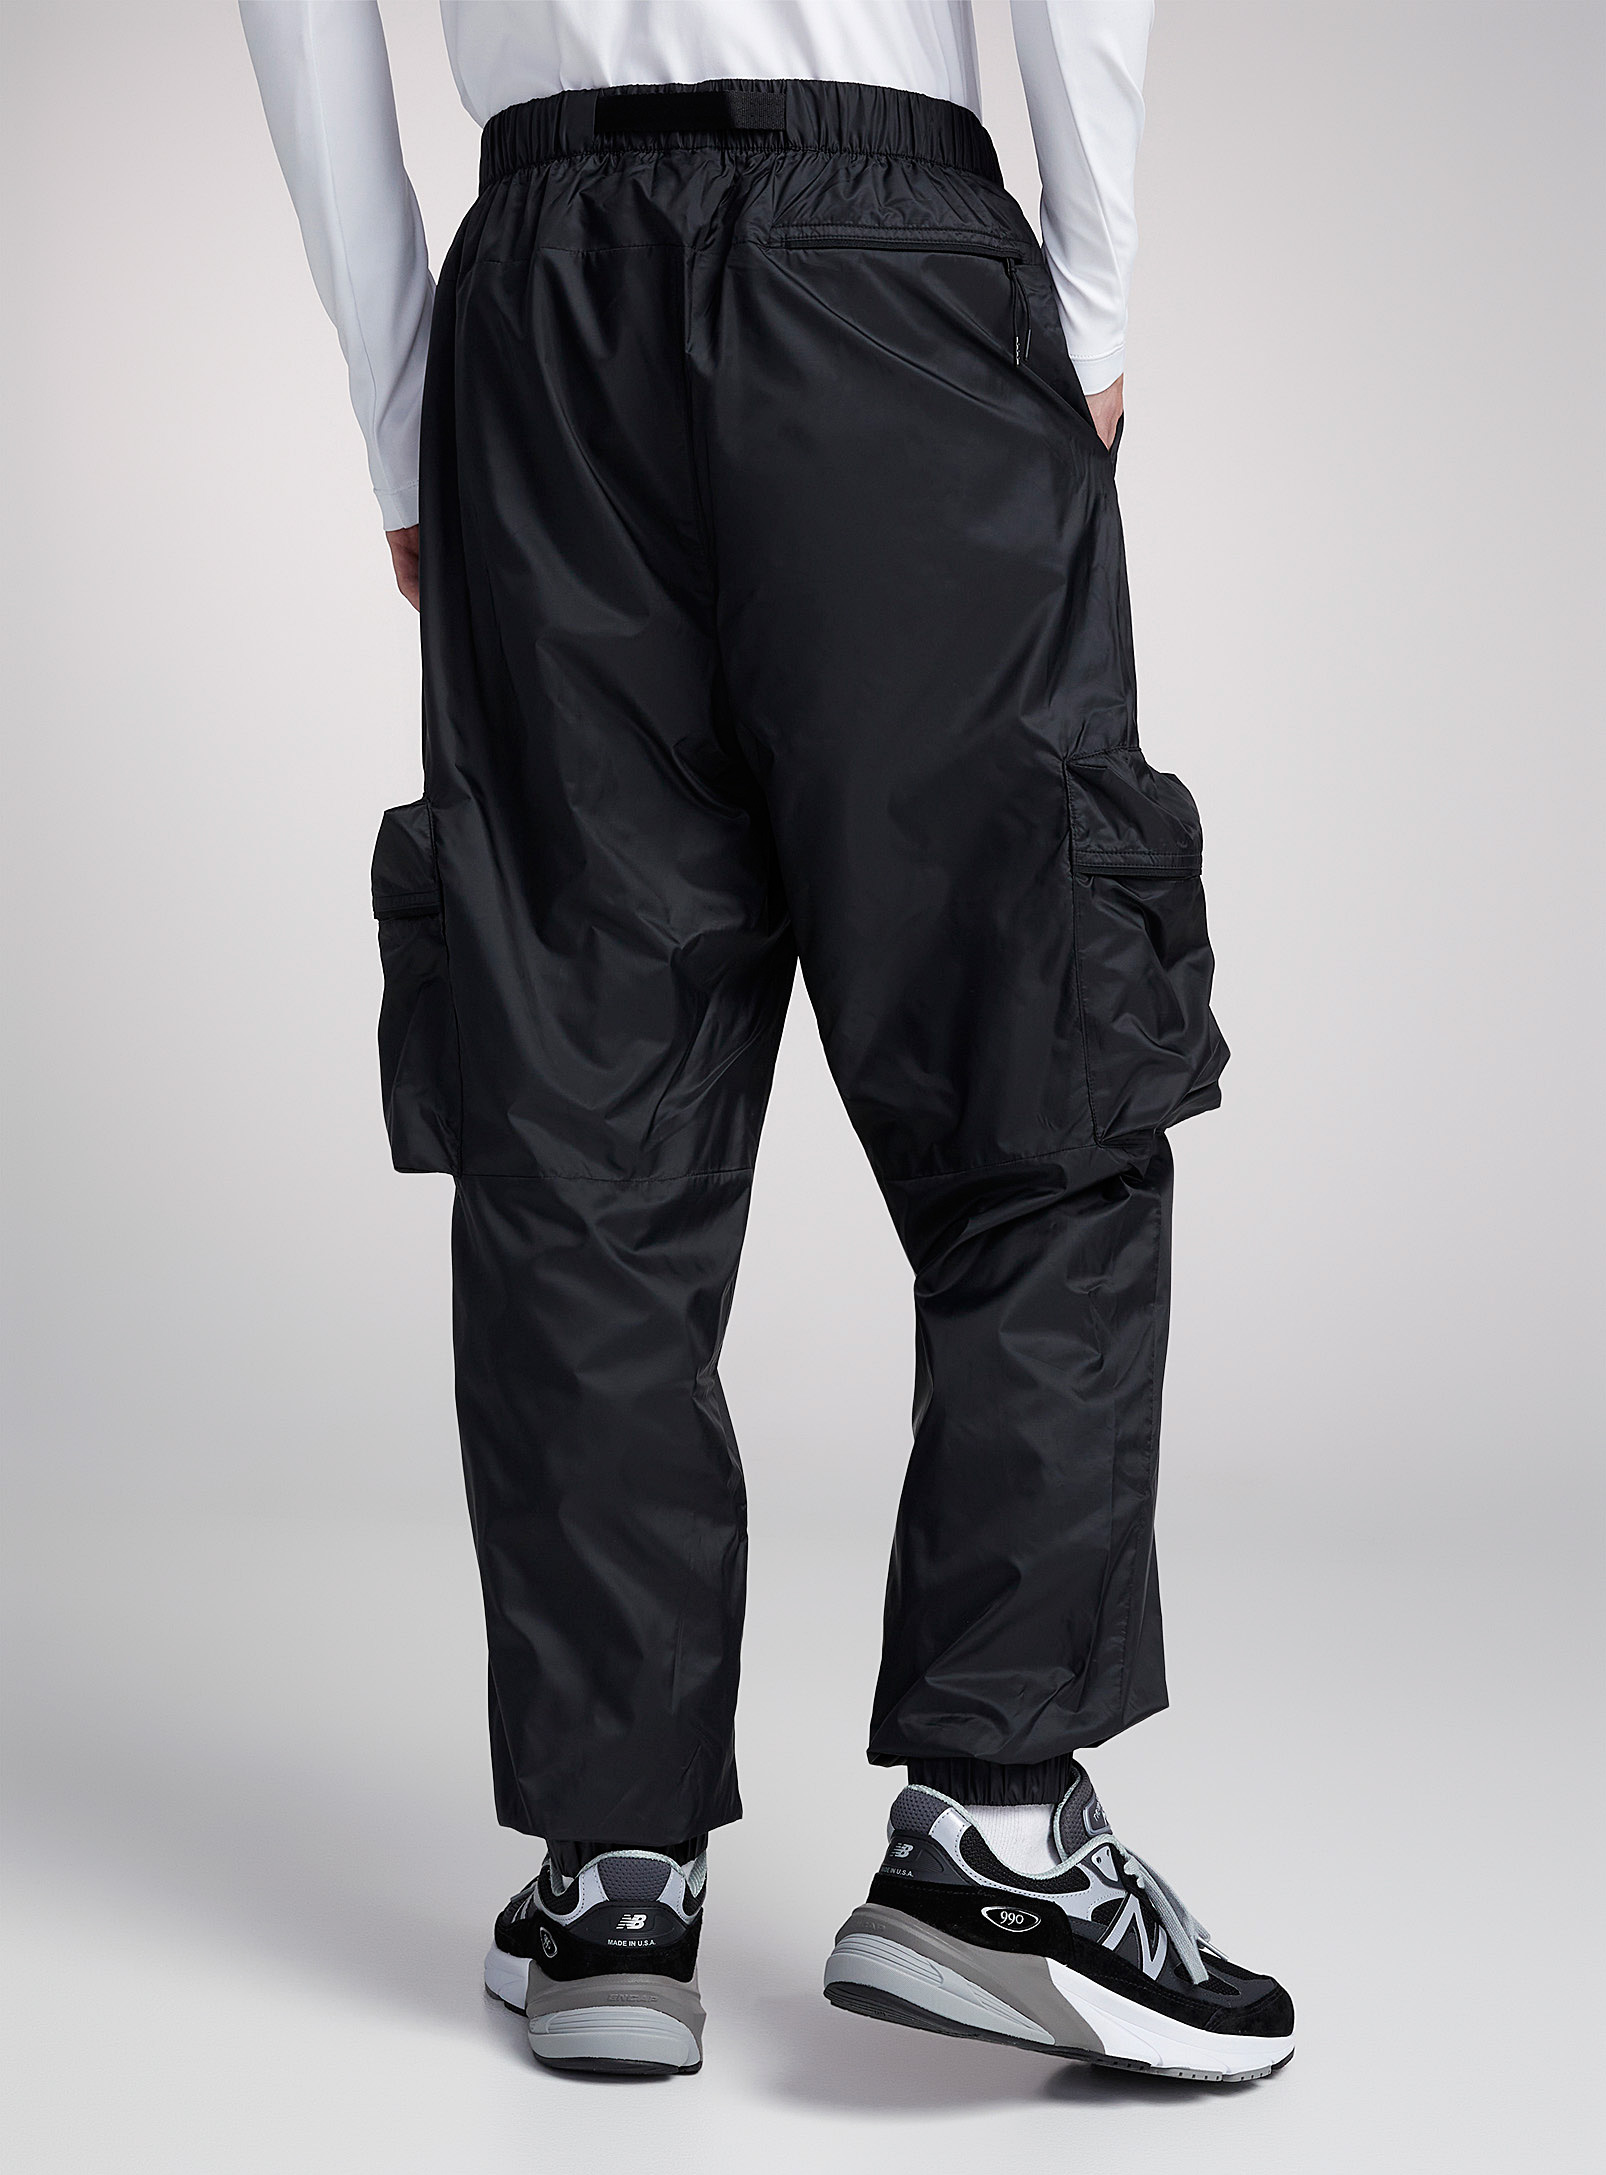 Nike - Pantalon Le Jogger cargo tactique en toile